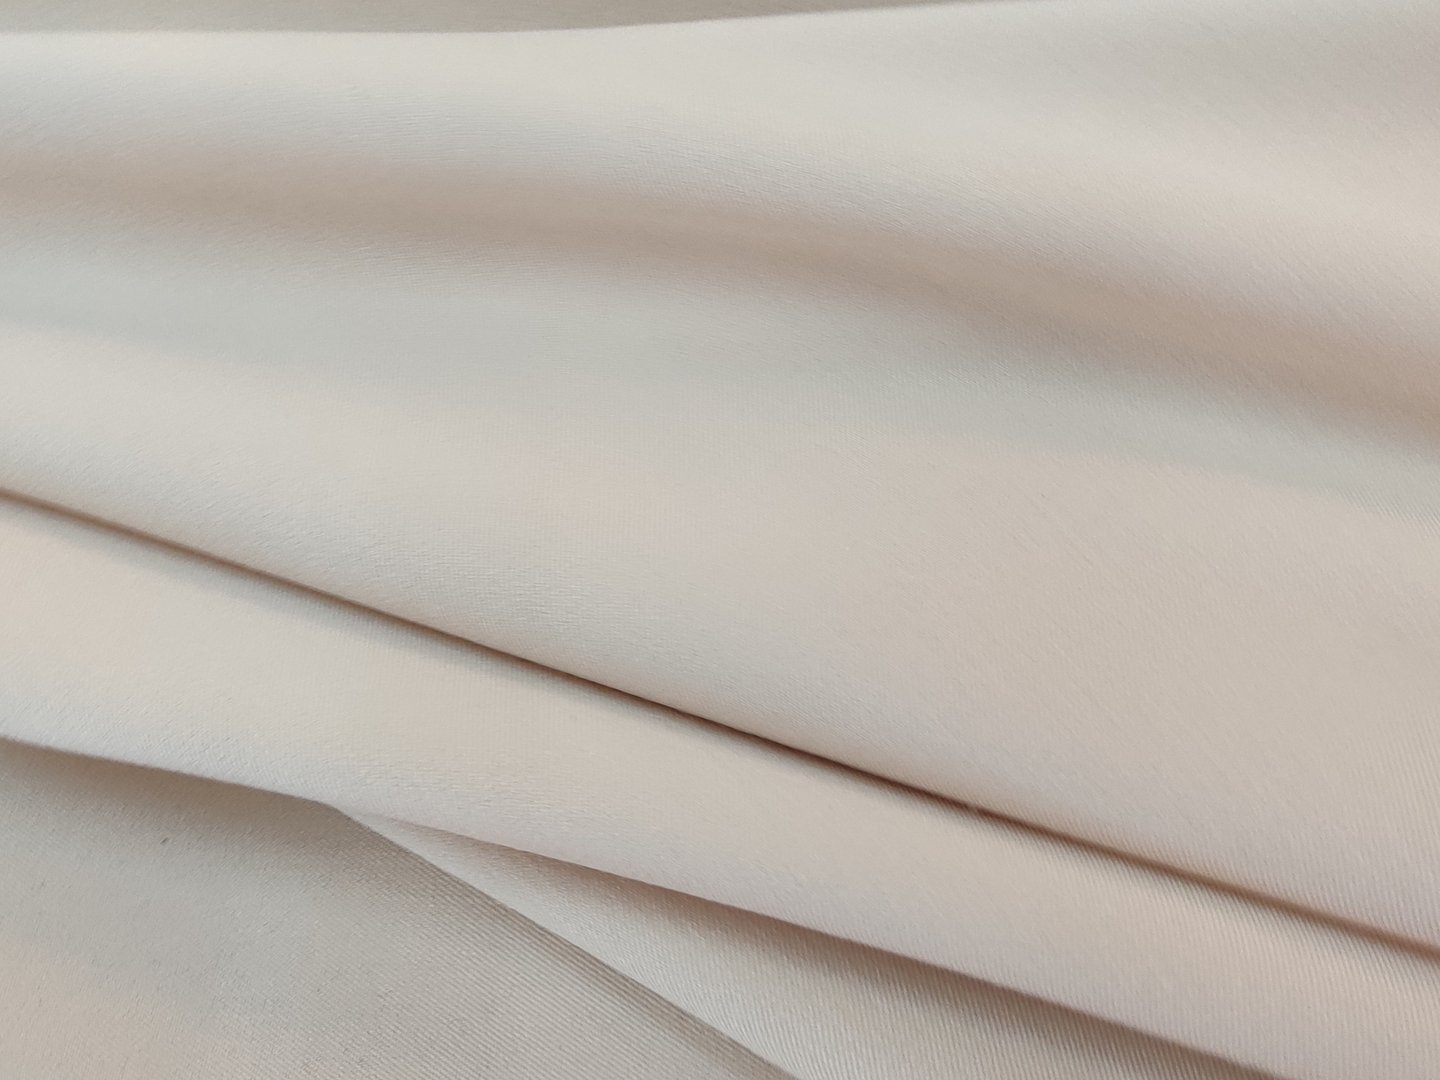 Light beige clothing fabric